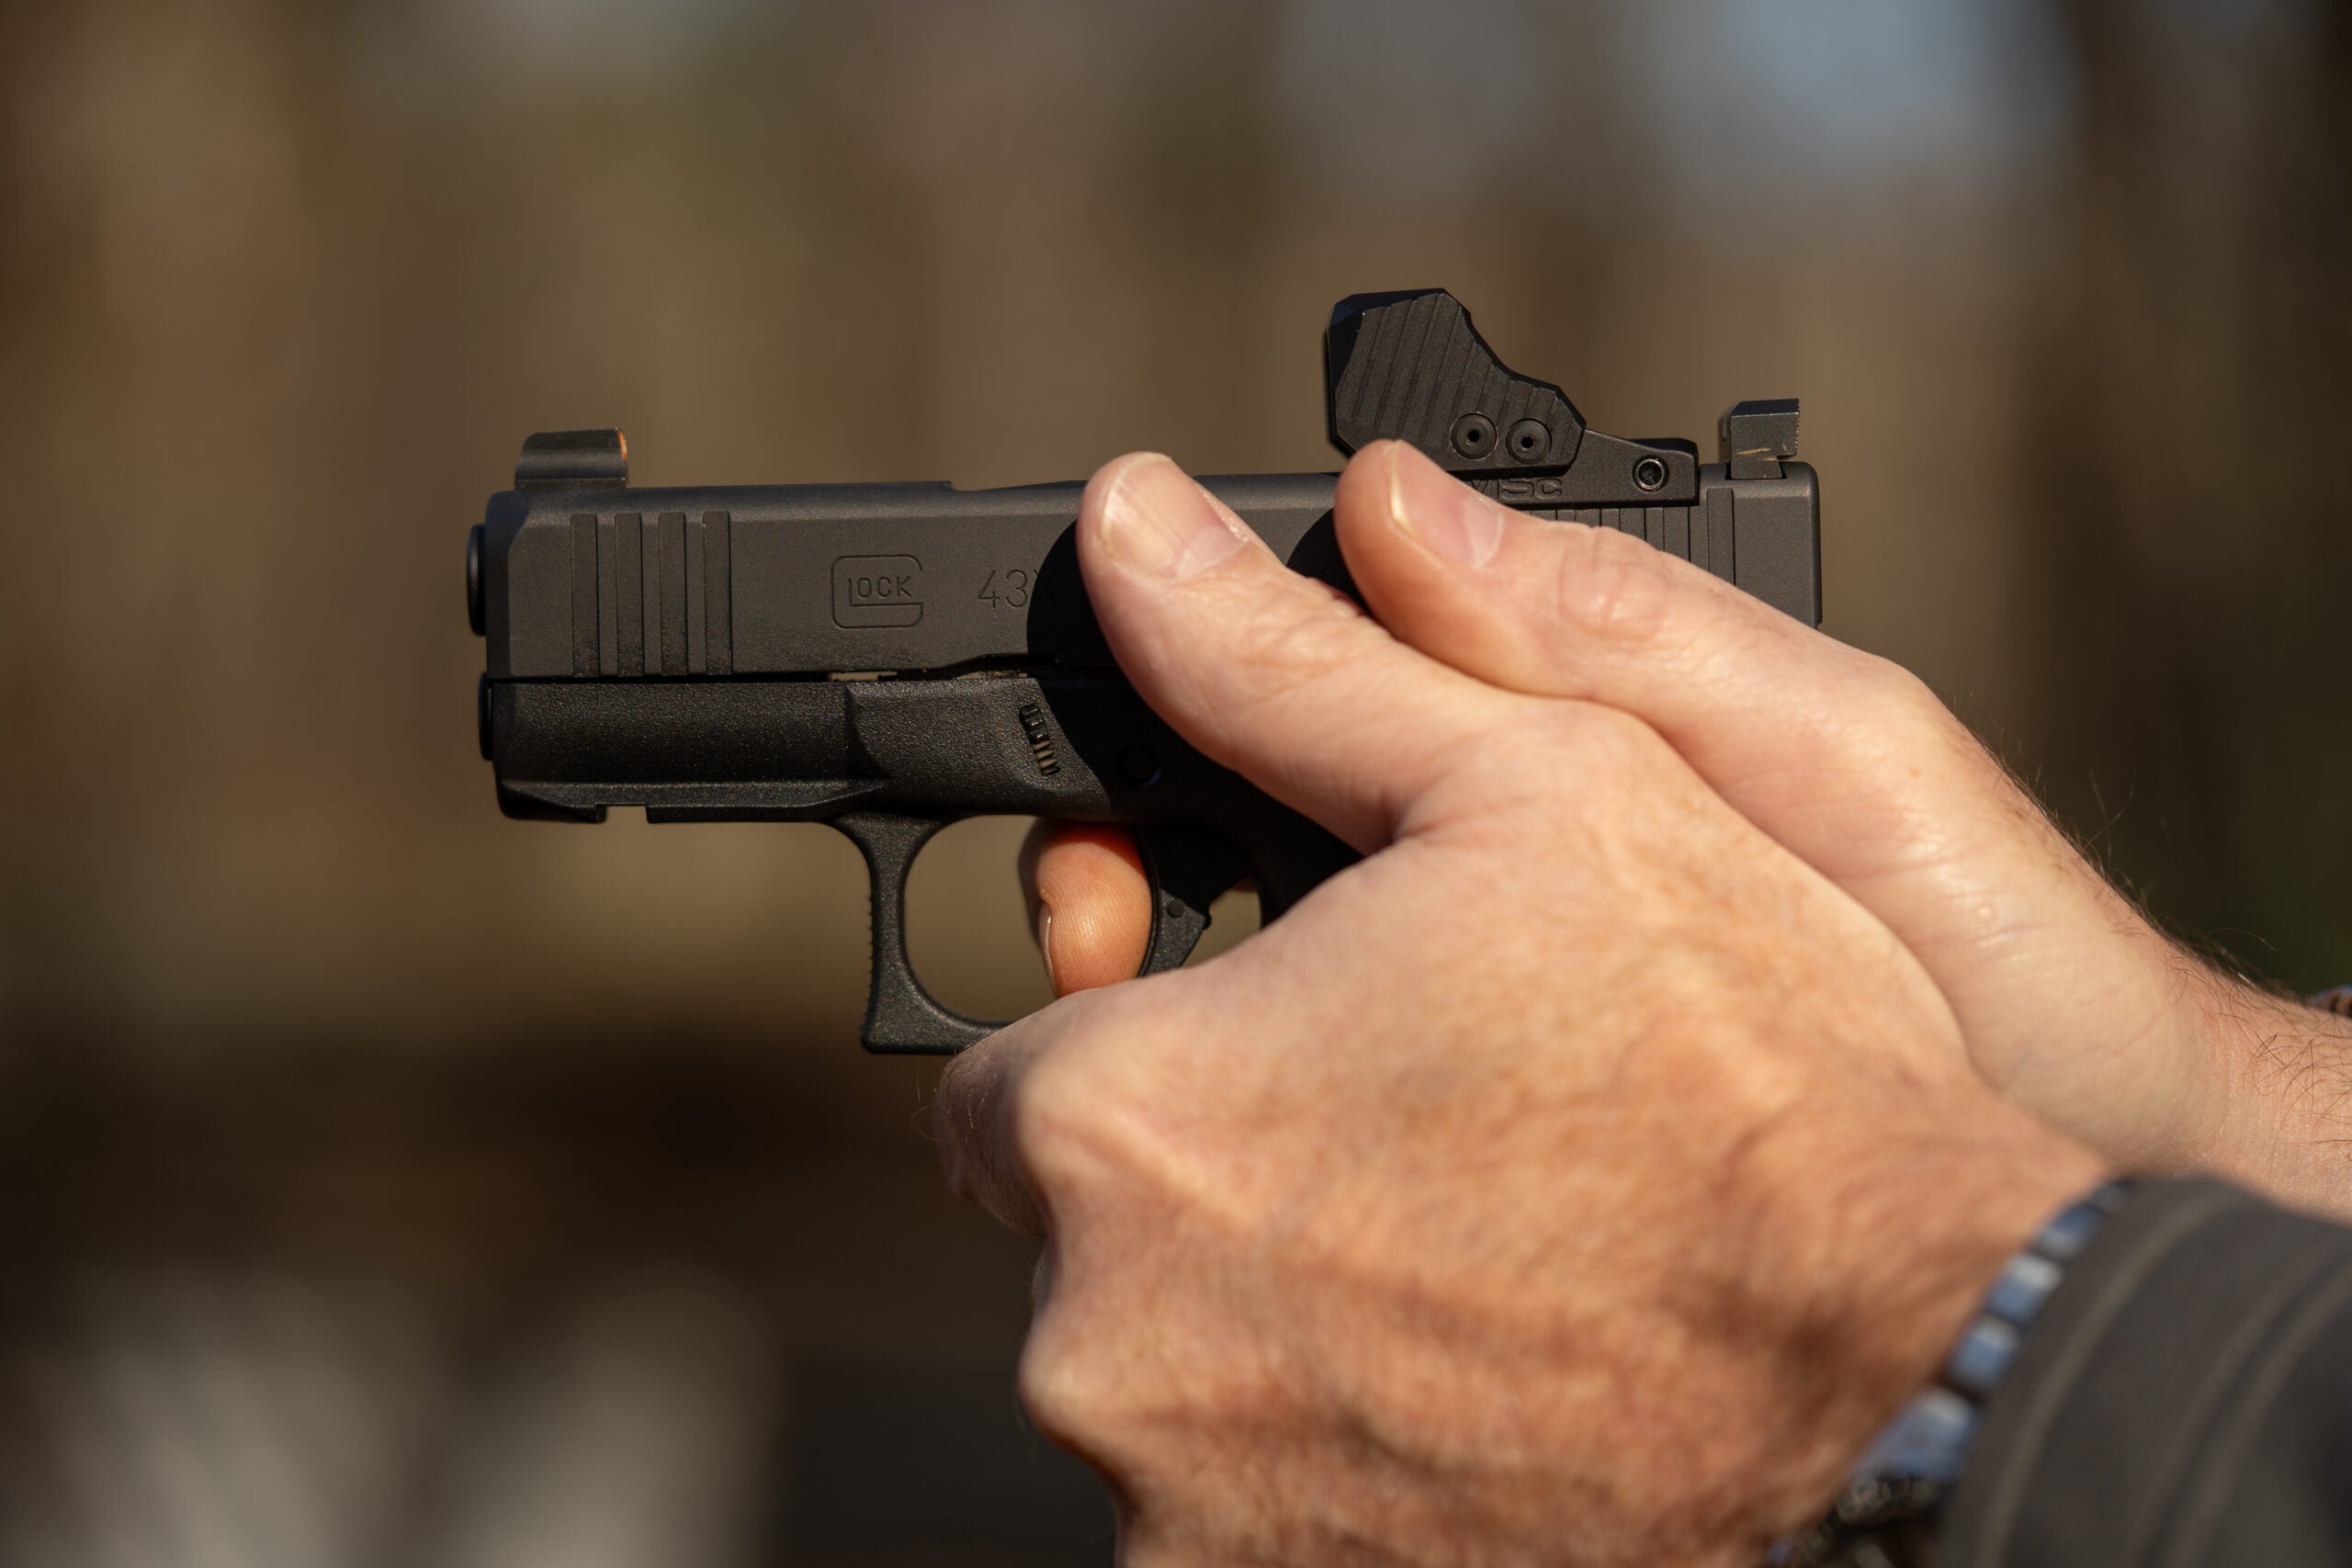 Closeup of man's hands firing a pistol, illustrating the proper grip and trigger finger position